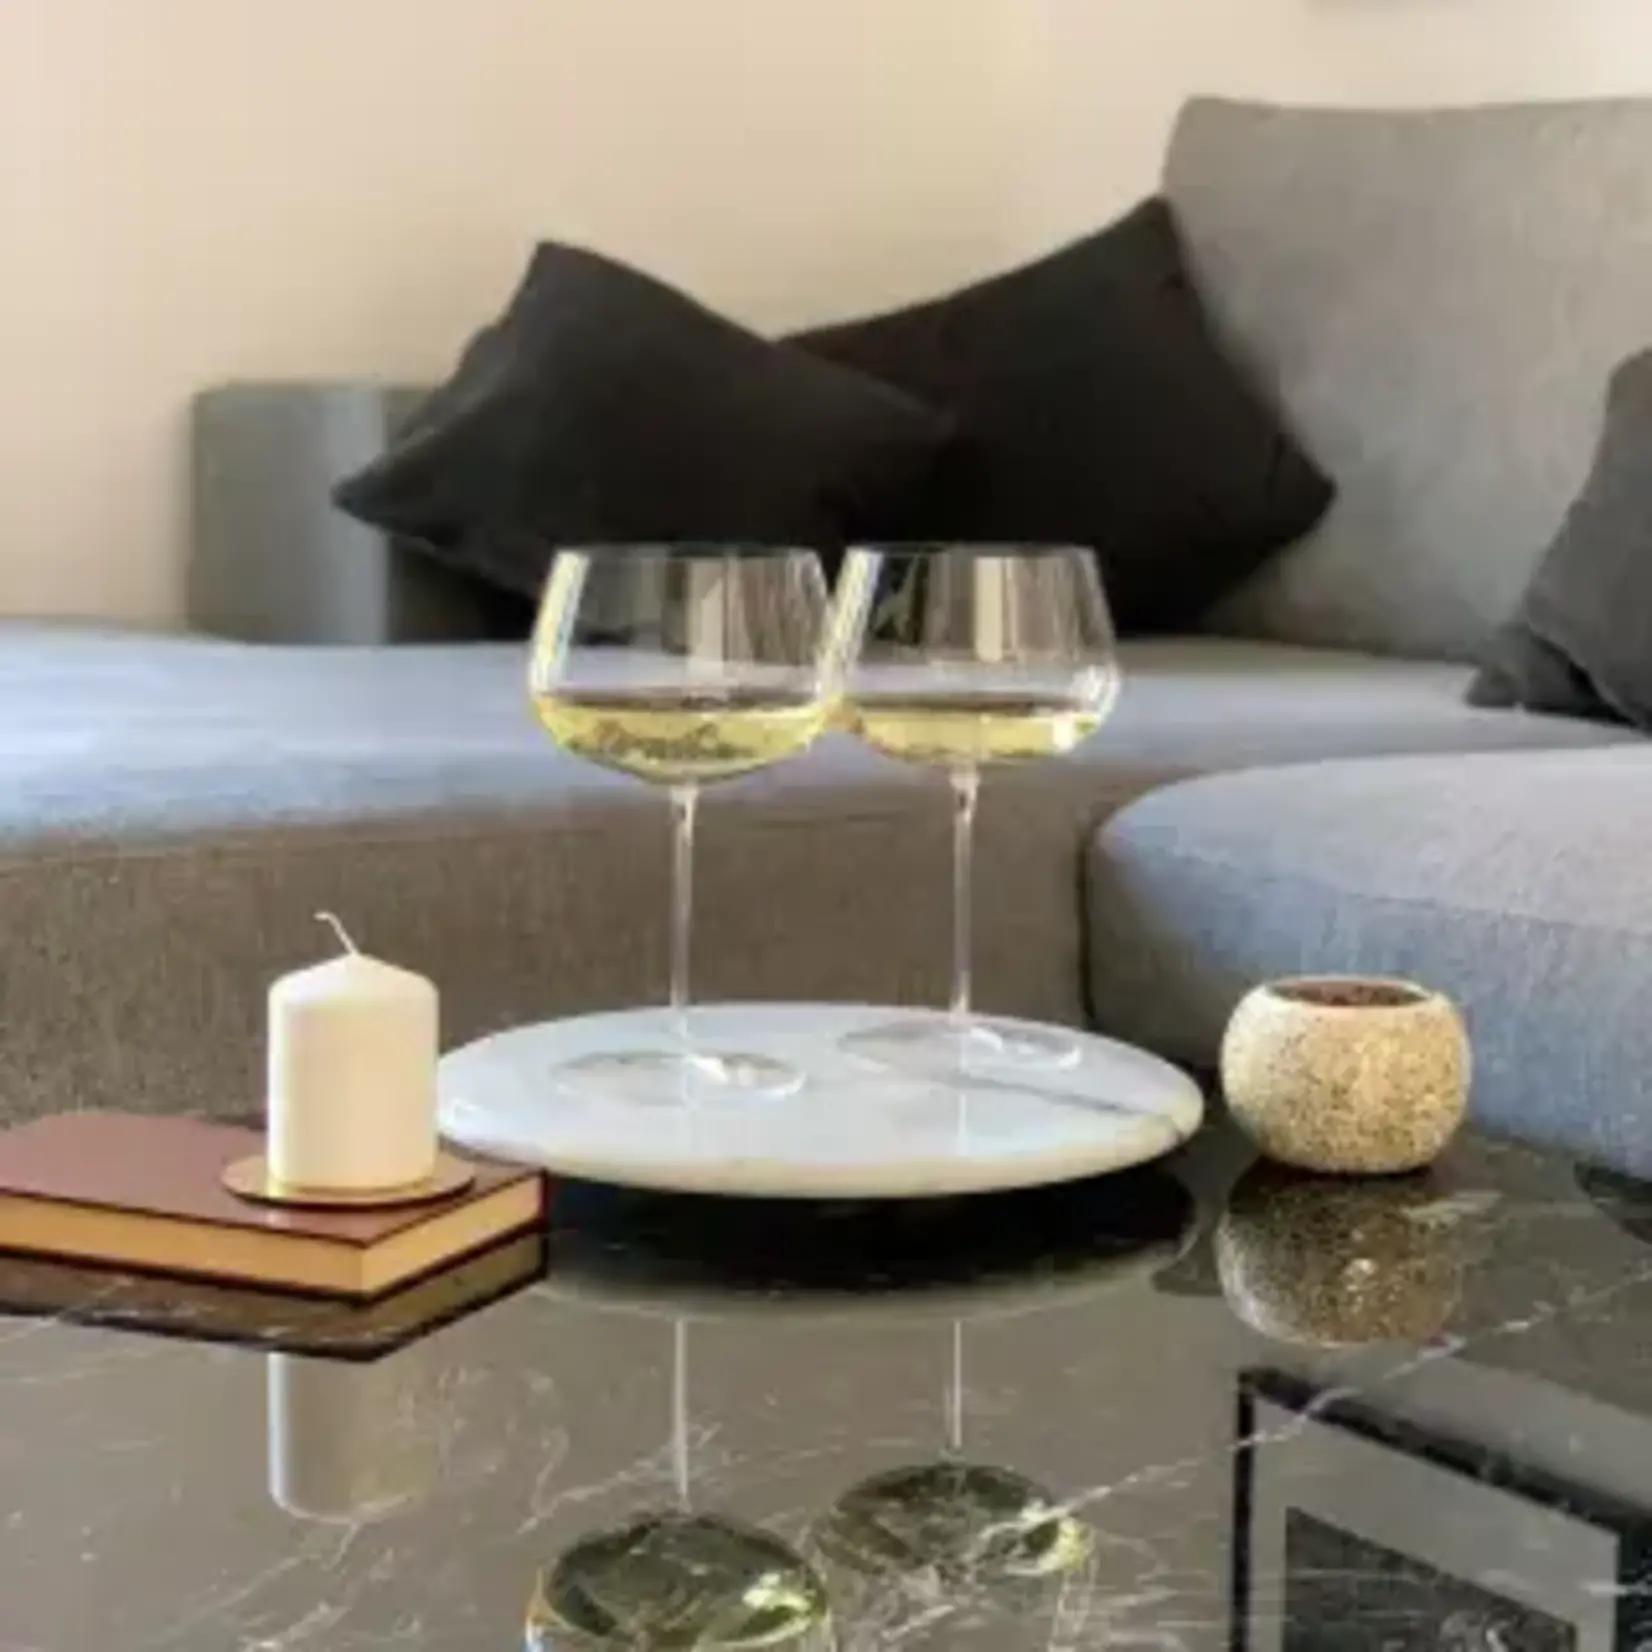 Nude Glass, USA Full Bodies White Wine Glass